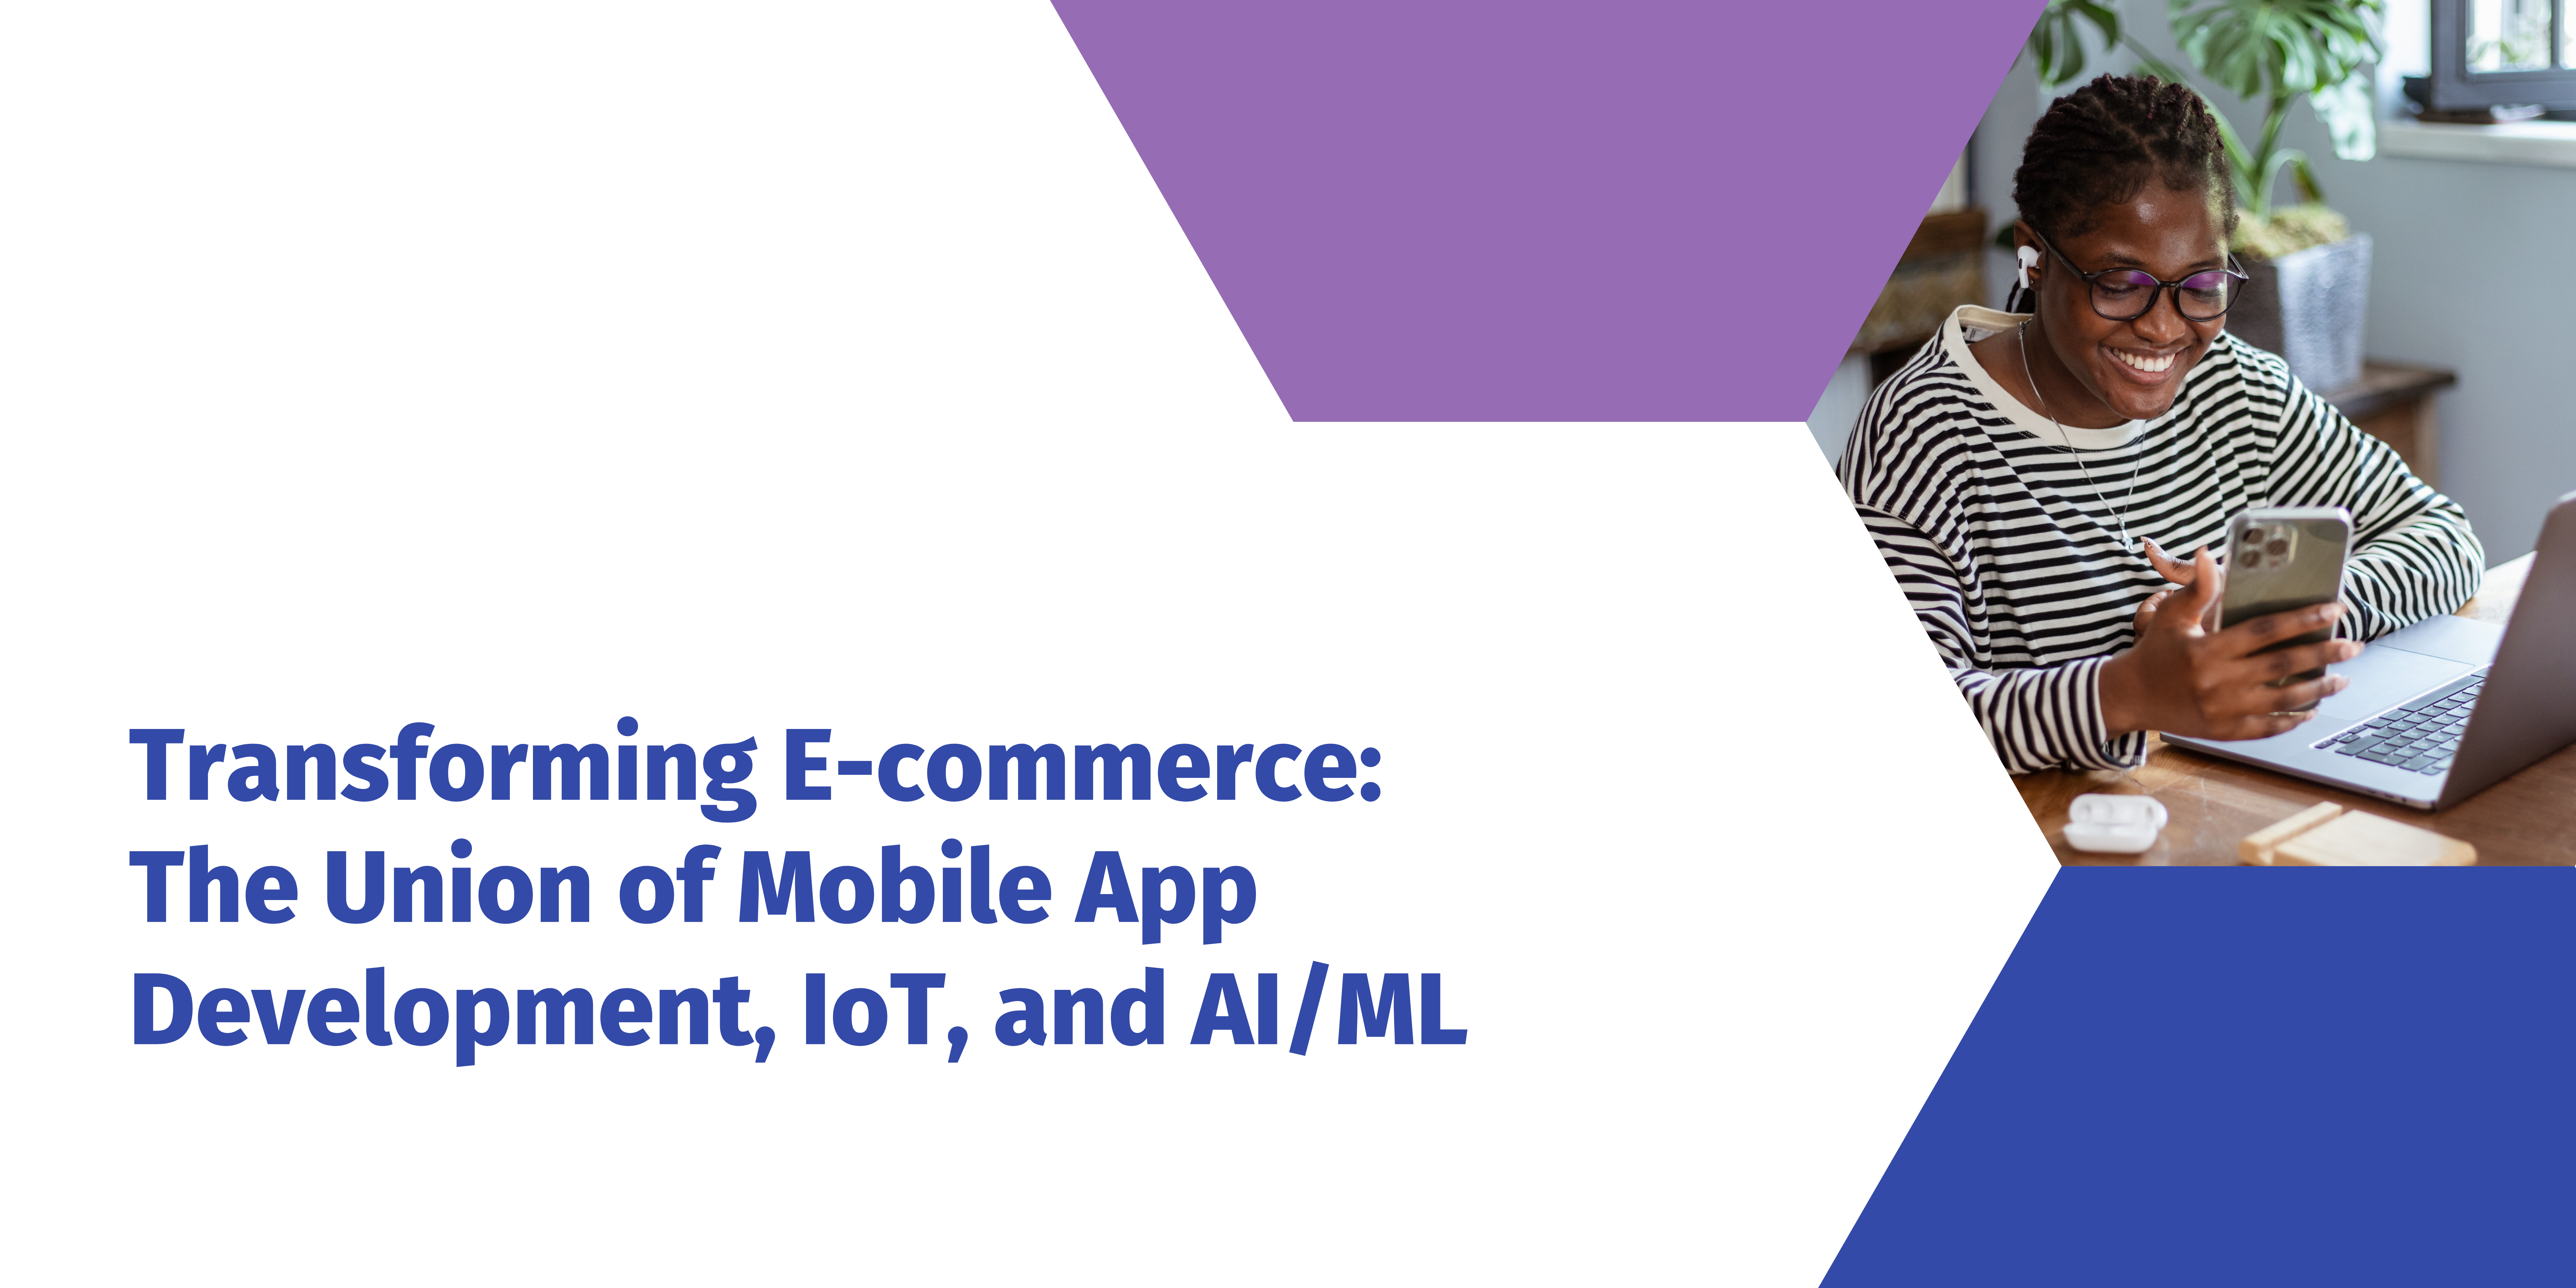 Transforming E-commerce: The Union of Mobile App Development, IoT, and AI/ML